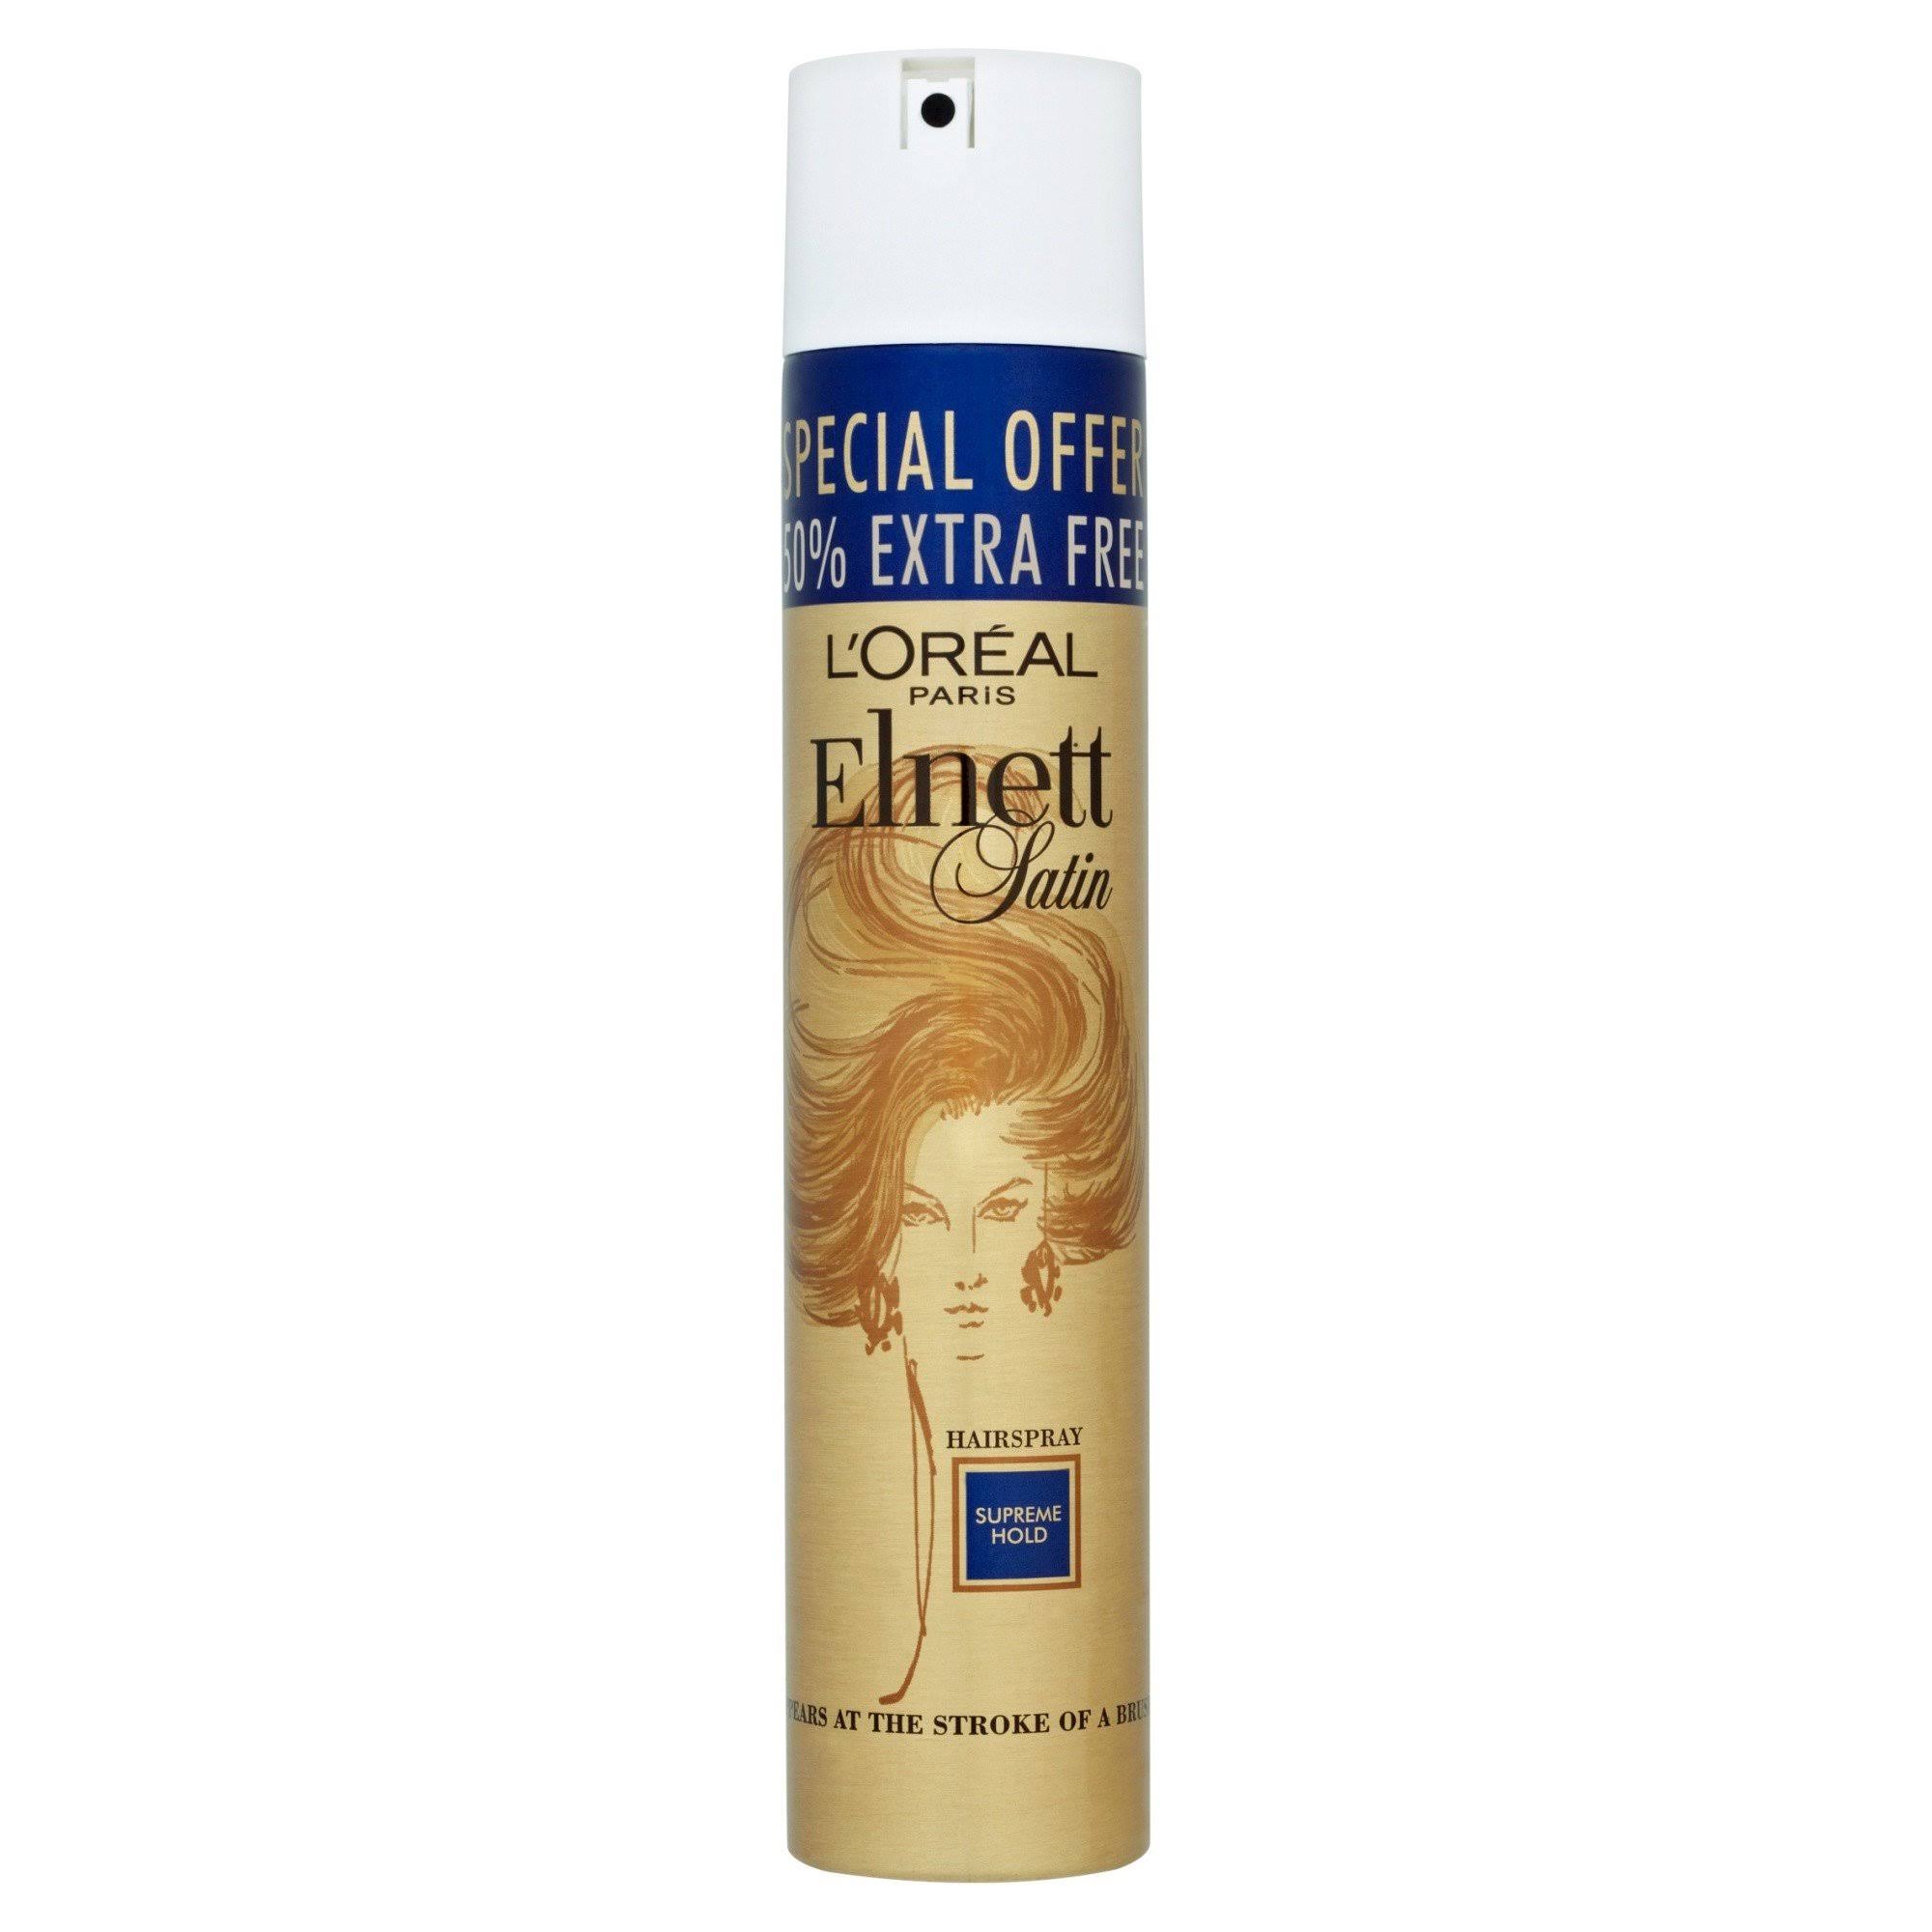 L'Oreal Elnett Satin Hairspray - Supreme Hold, 300ml